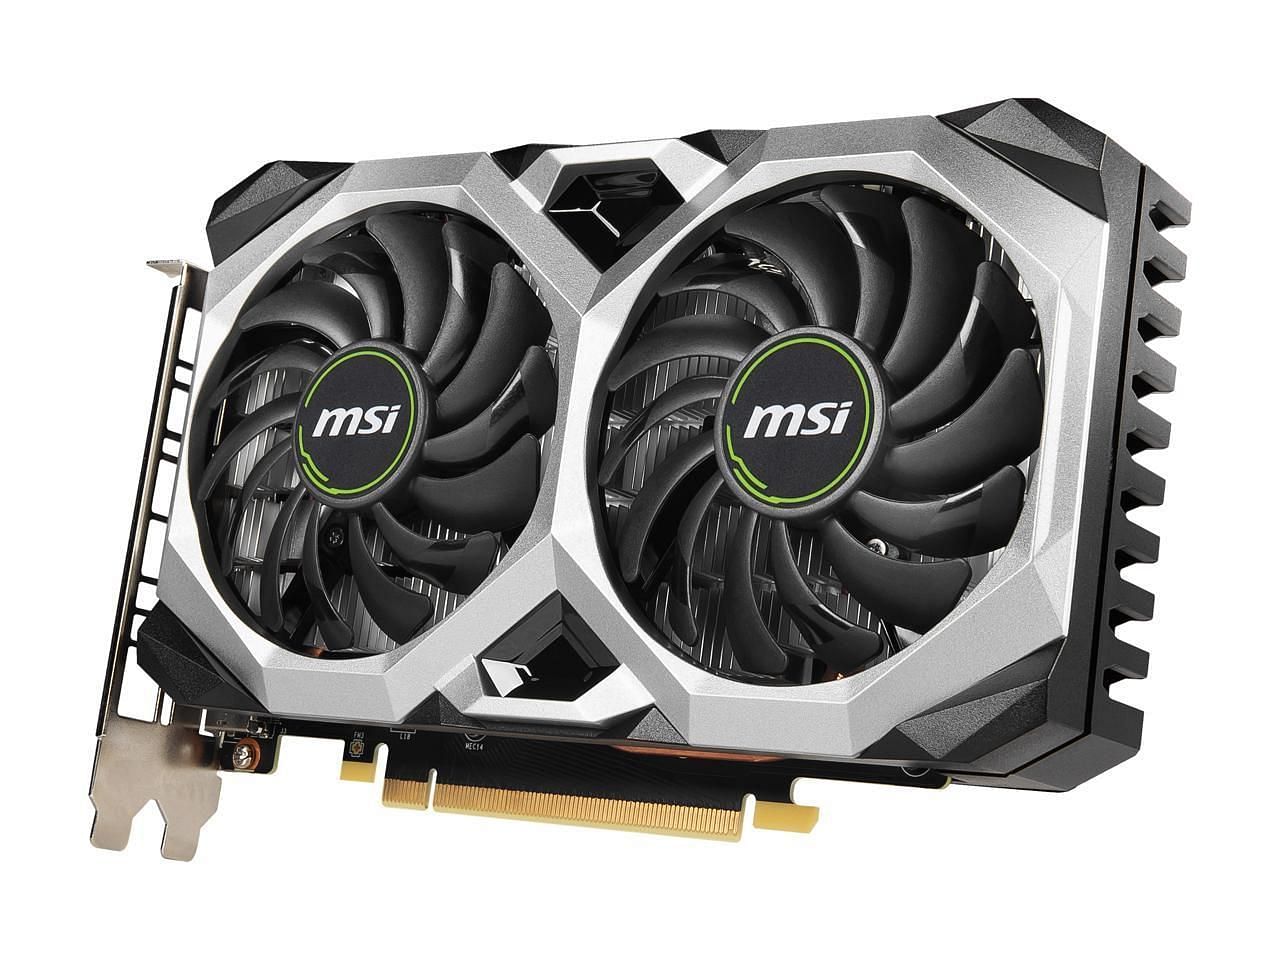 The MSI Geforce GTX 1660 Super 6 GB Ventus XS OC (Image via Newegg)